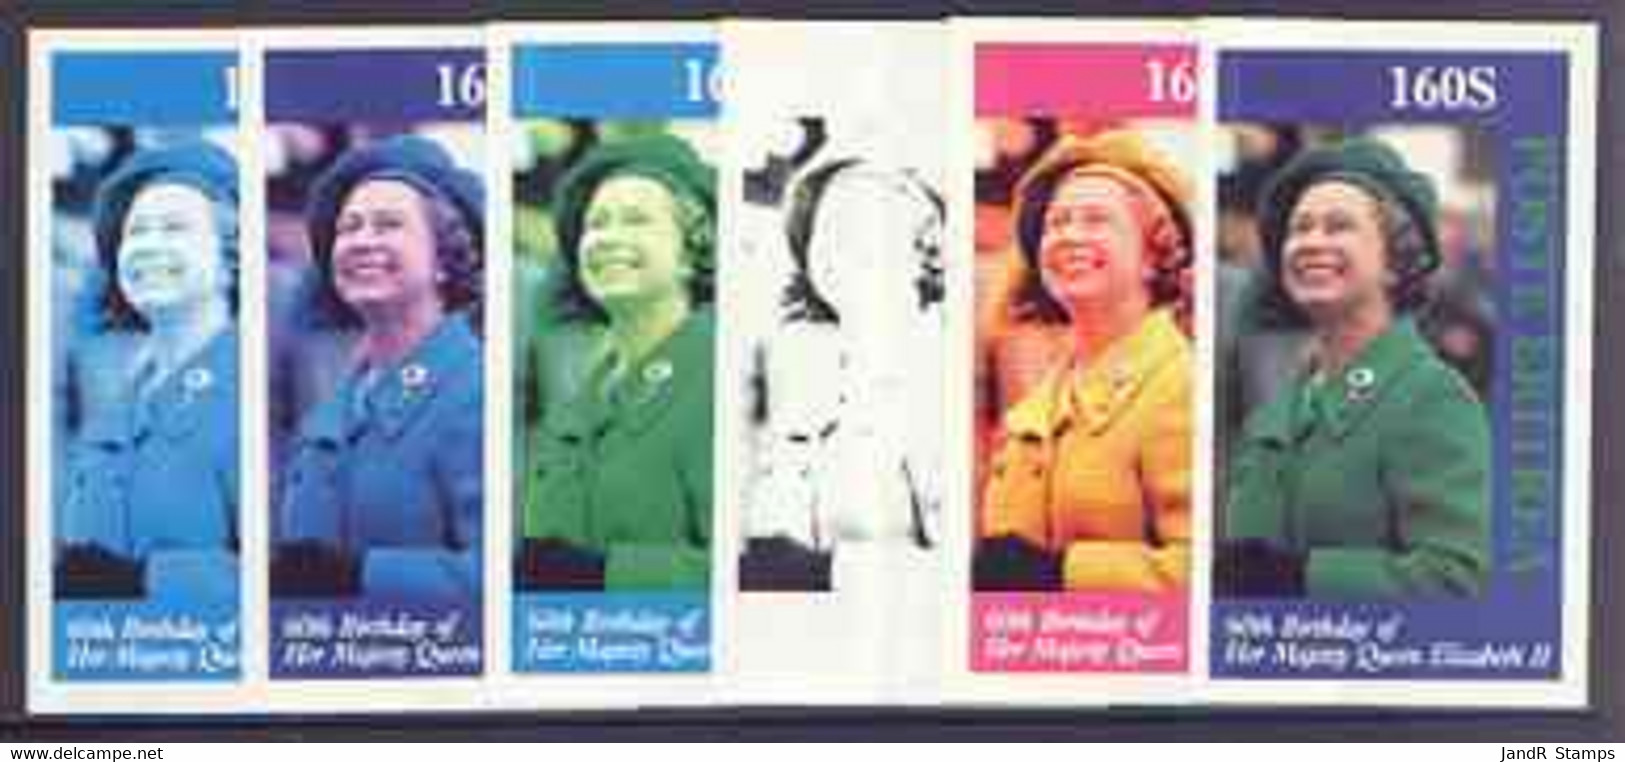 Eritrea 1986 Queen's 60th Birthday Imperf Souvenir Sheet (160s Value) The Set Of 6 Progressive Proofs Comprising Single - Eritrea